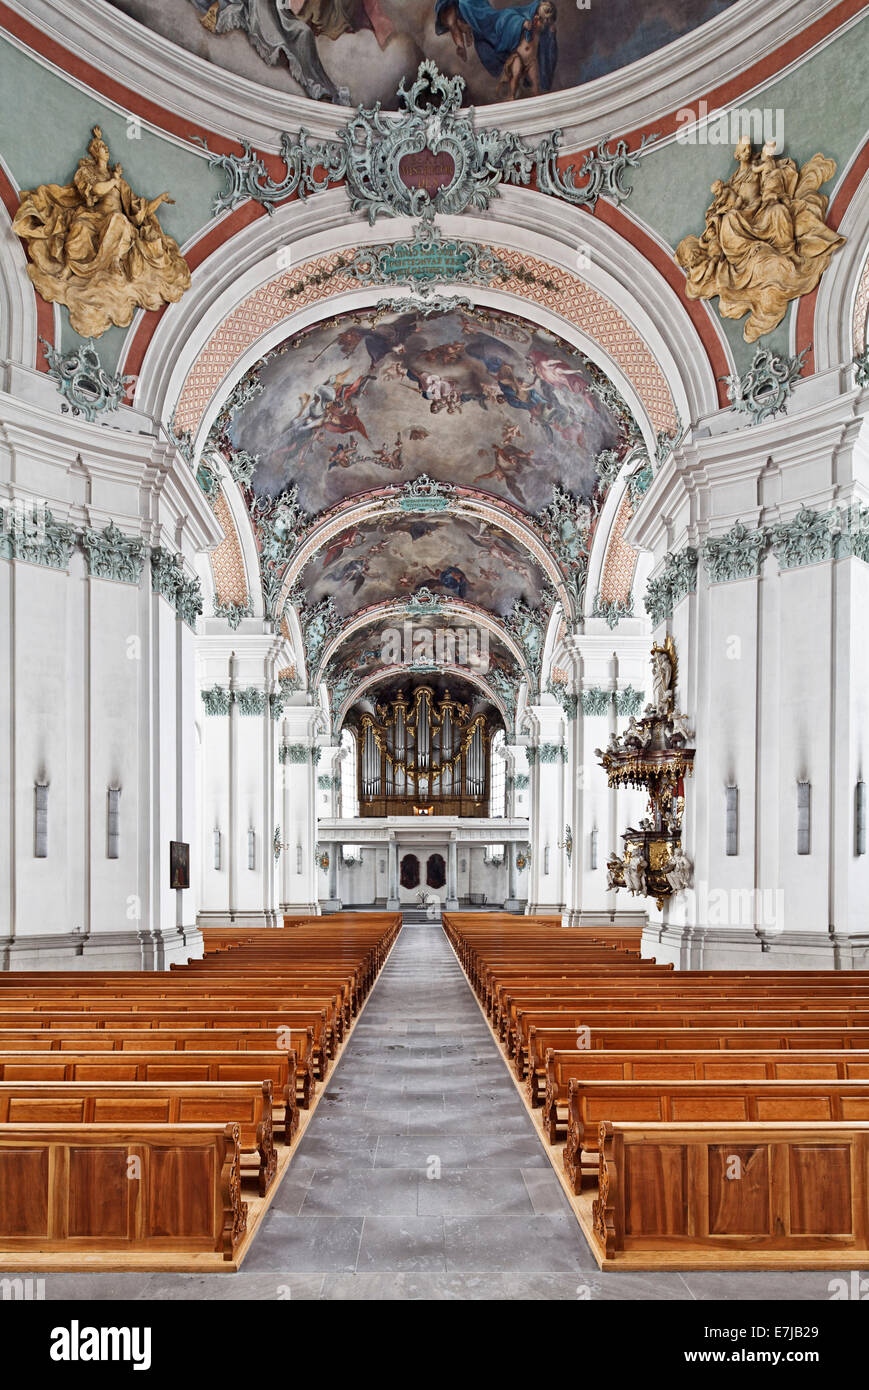 Interior, nave of the baroque Catholic Cathedral of St. Gallen, St. Gallen, Canton of St. Gallen, Switzerland Stock Photo